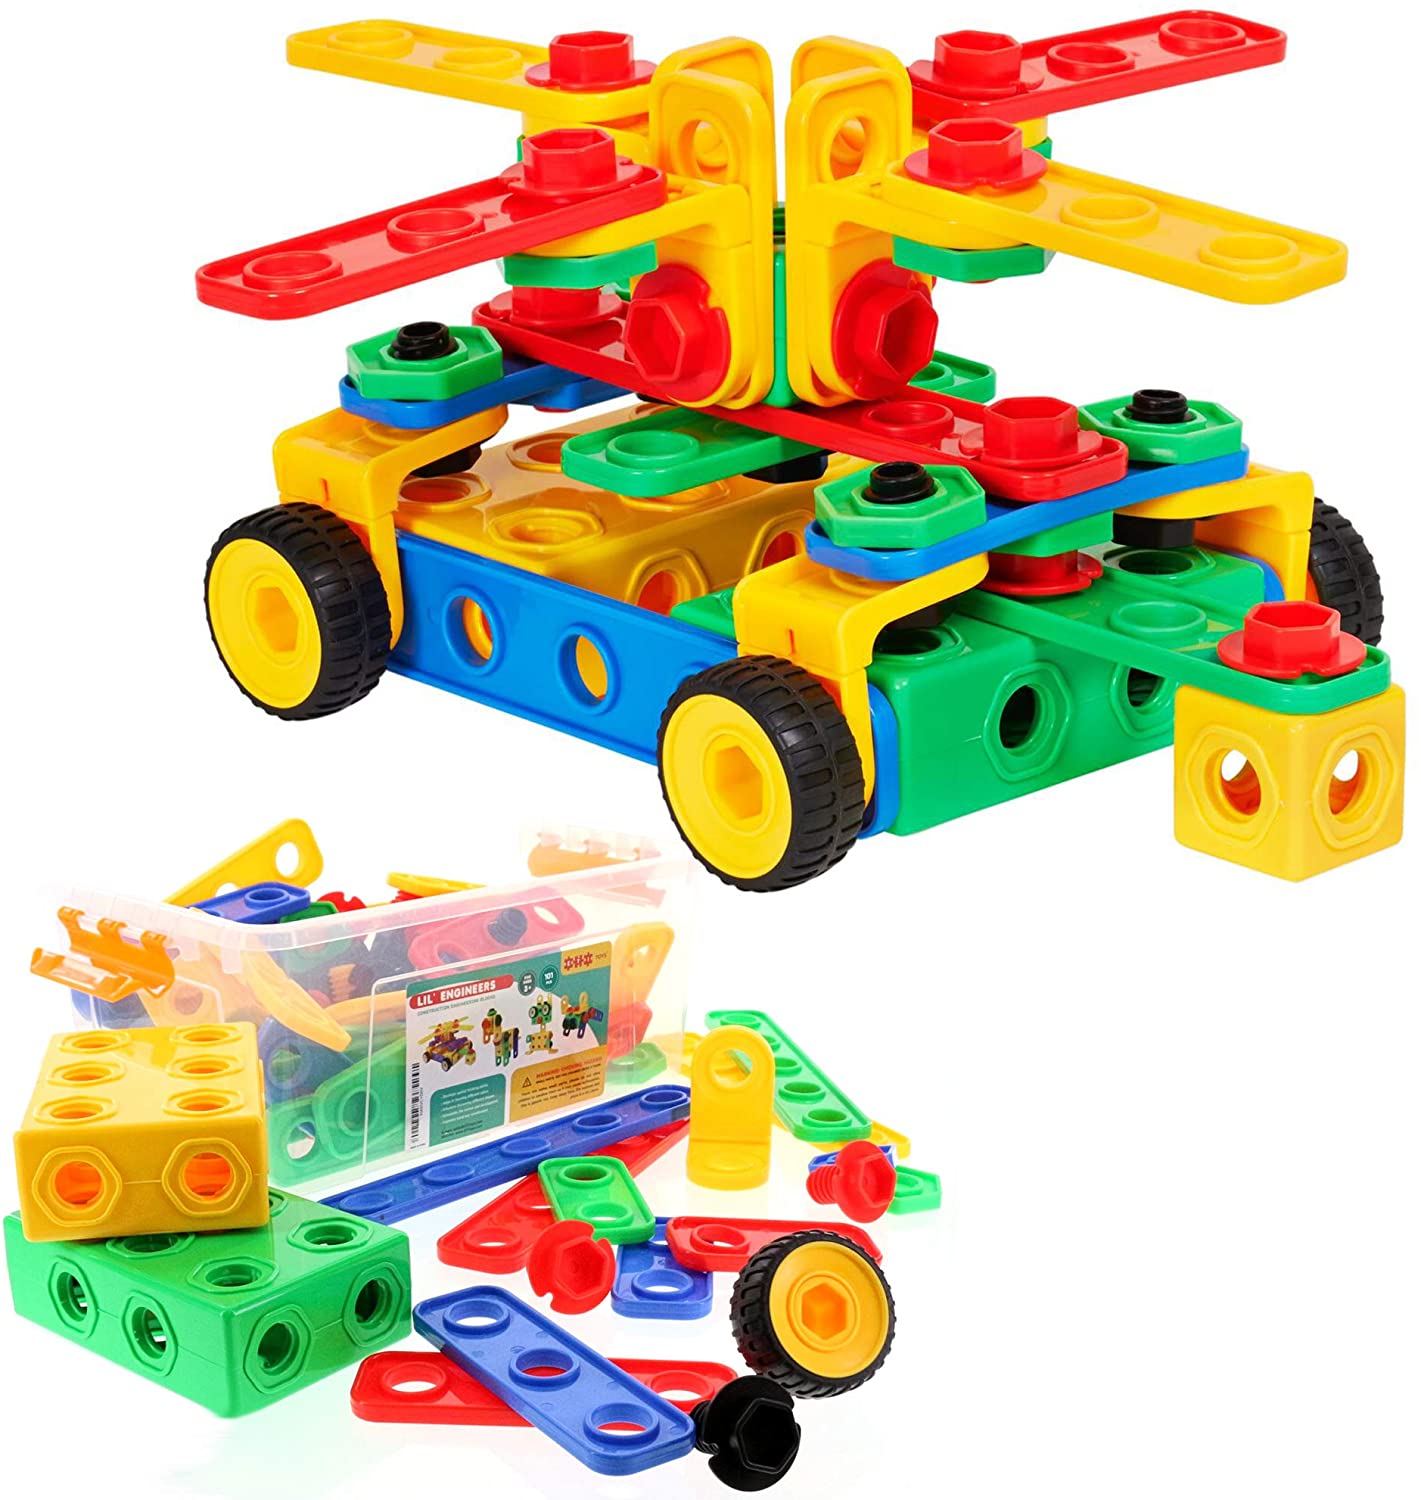 ETI Toys STEM Fine Motor Skills Building Gift For 3-Year-Old Boys